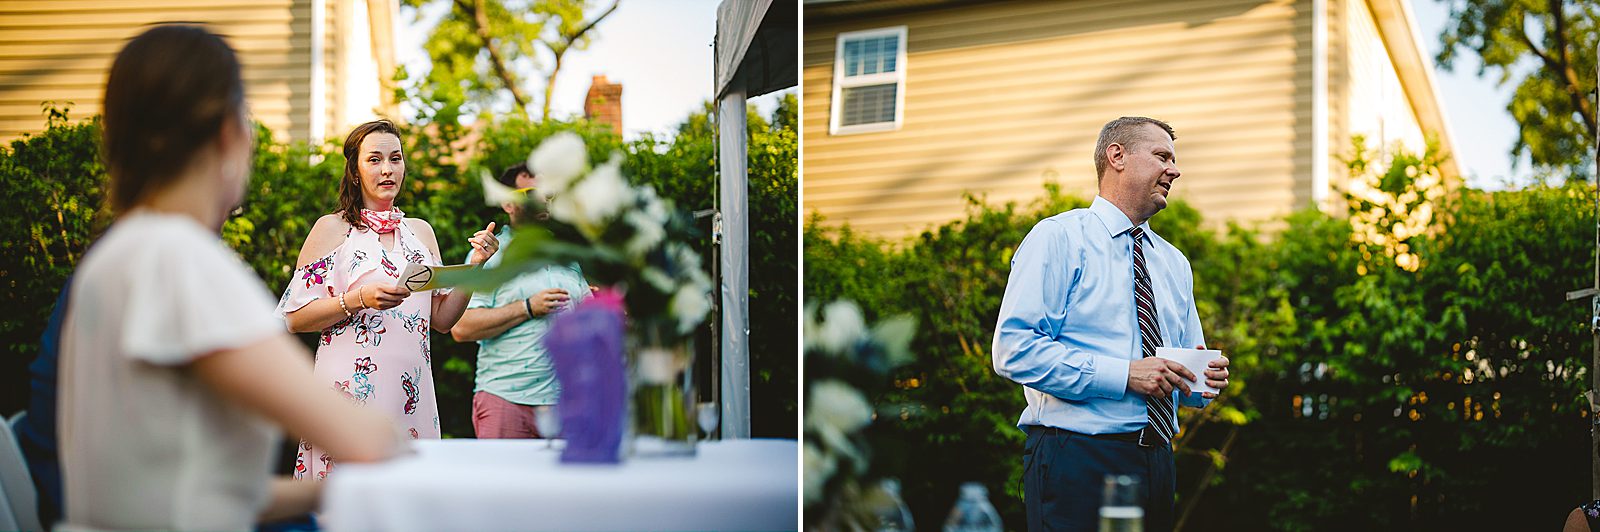 30 giving speeches at back yard wedding - Amazing Wedding in Backyard // Kristen + Jeff